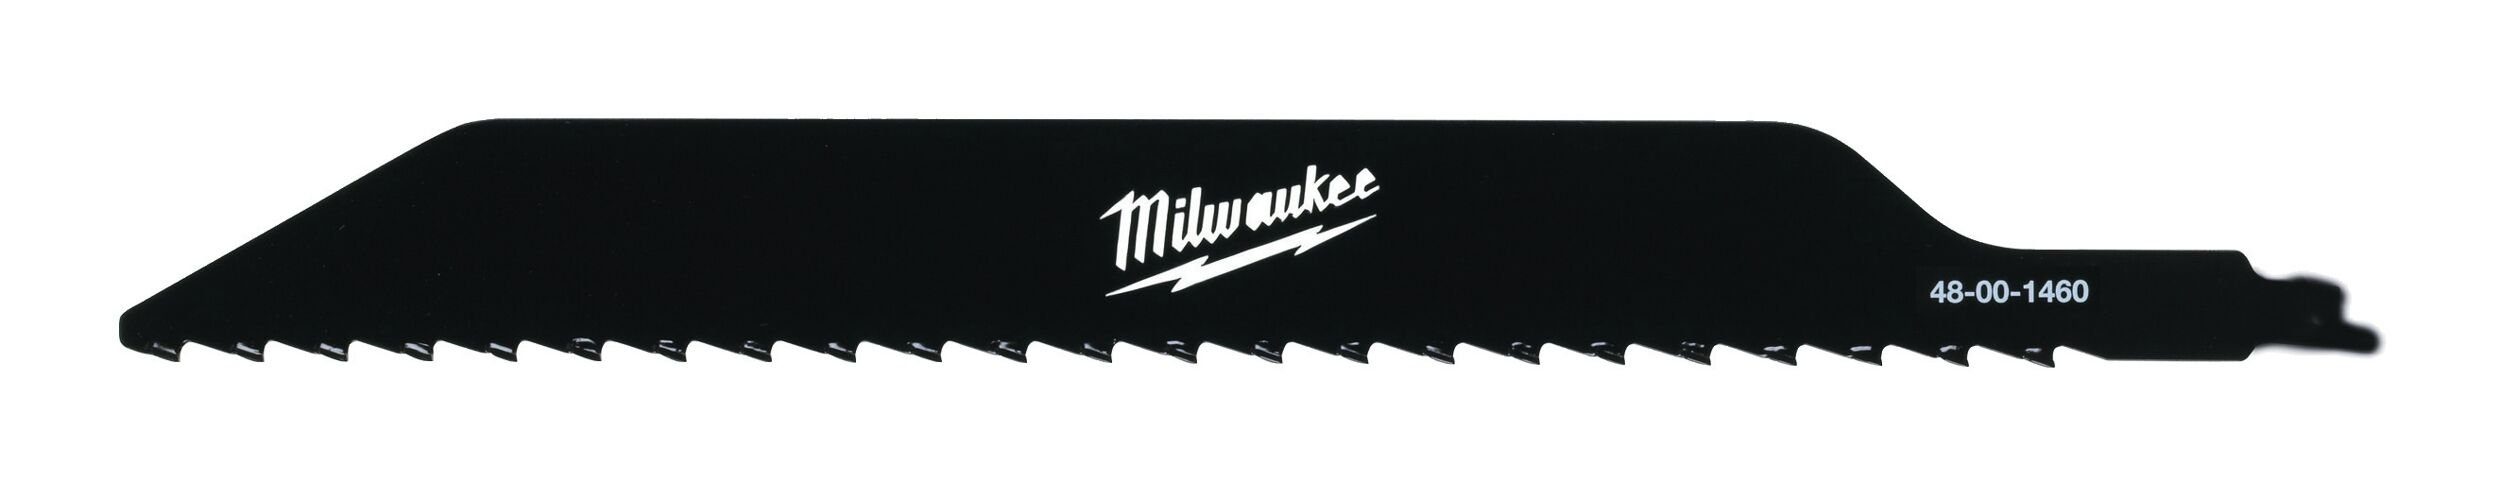 Milwaukee Säbelsägeblatt, 450 x 17 mm für Porenbeton